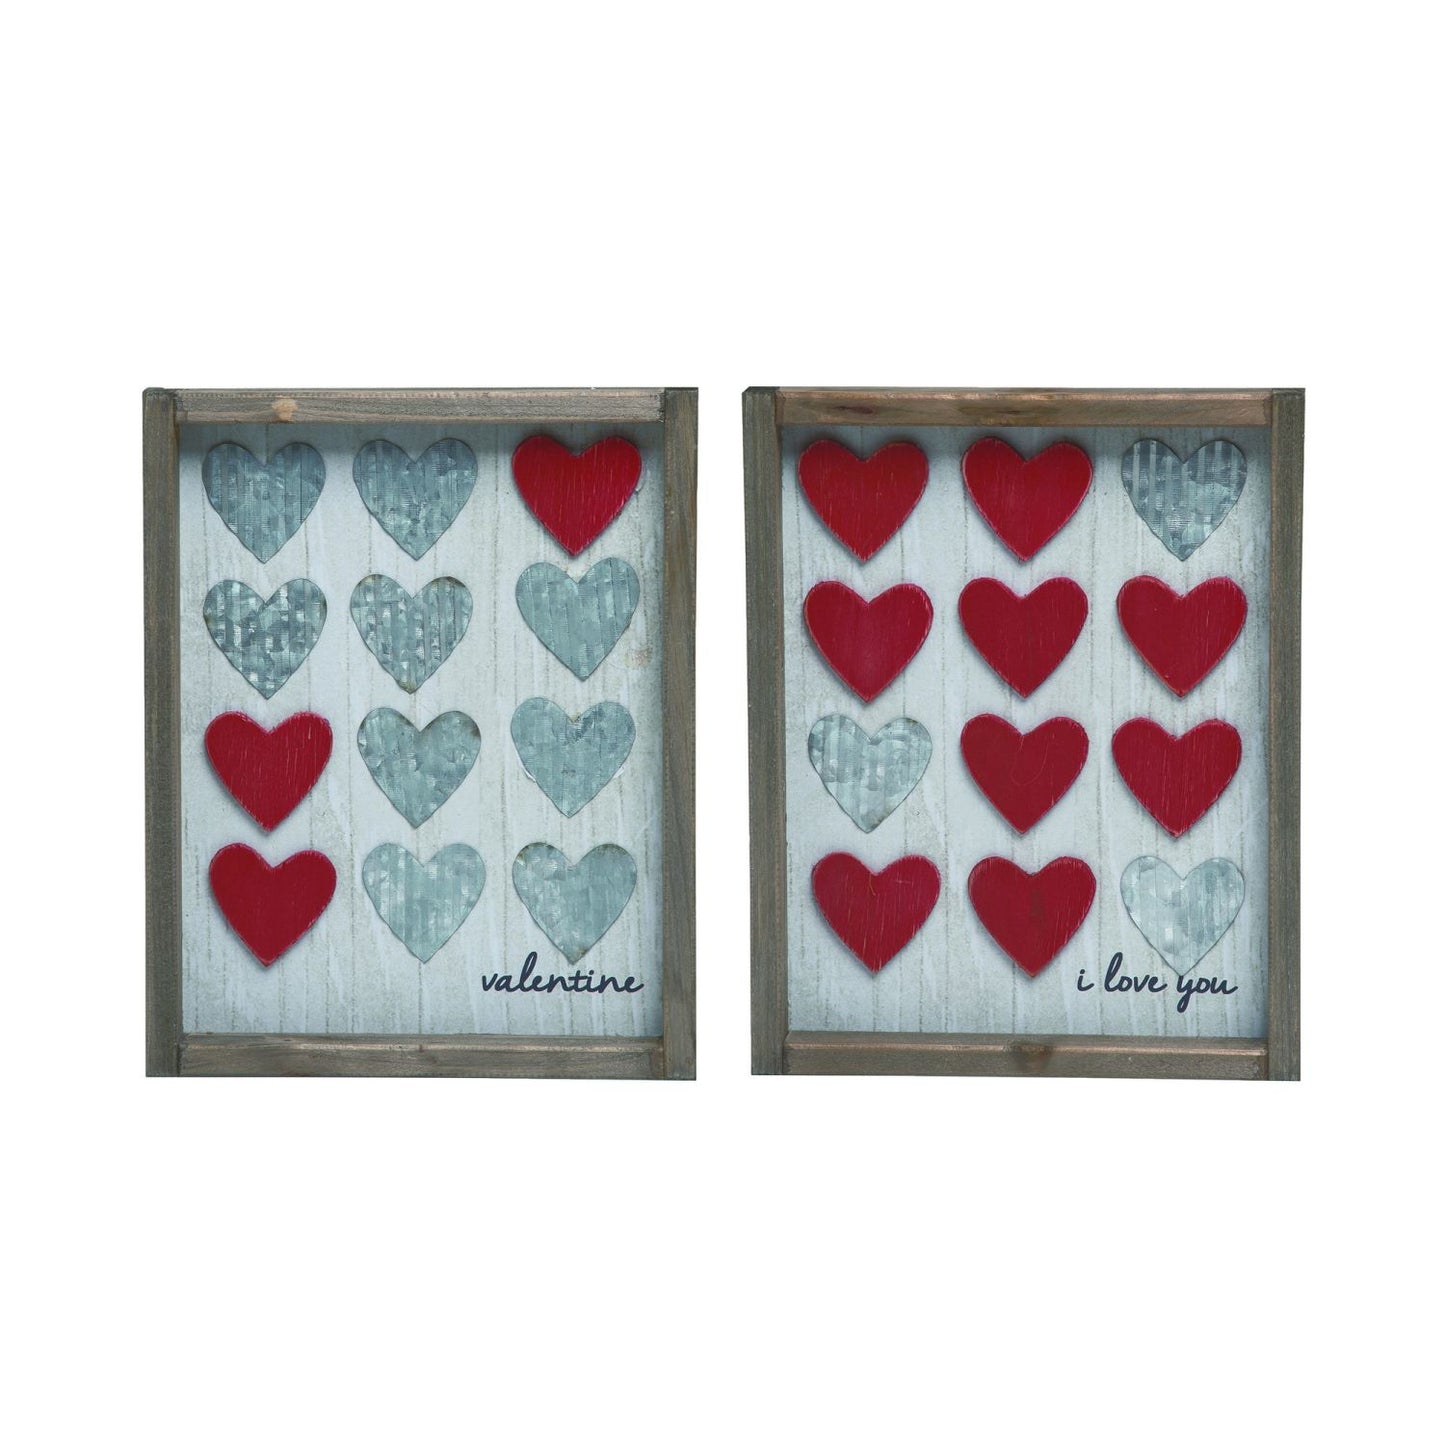 Transpac Wood Valentine Heart Frame Decor, Set Of 2, Assortment